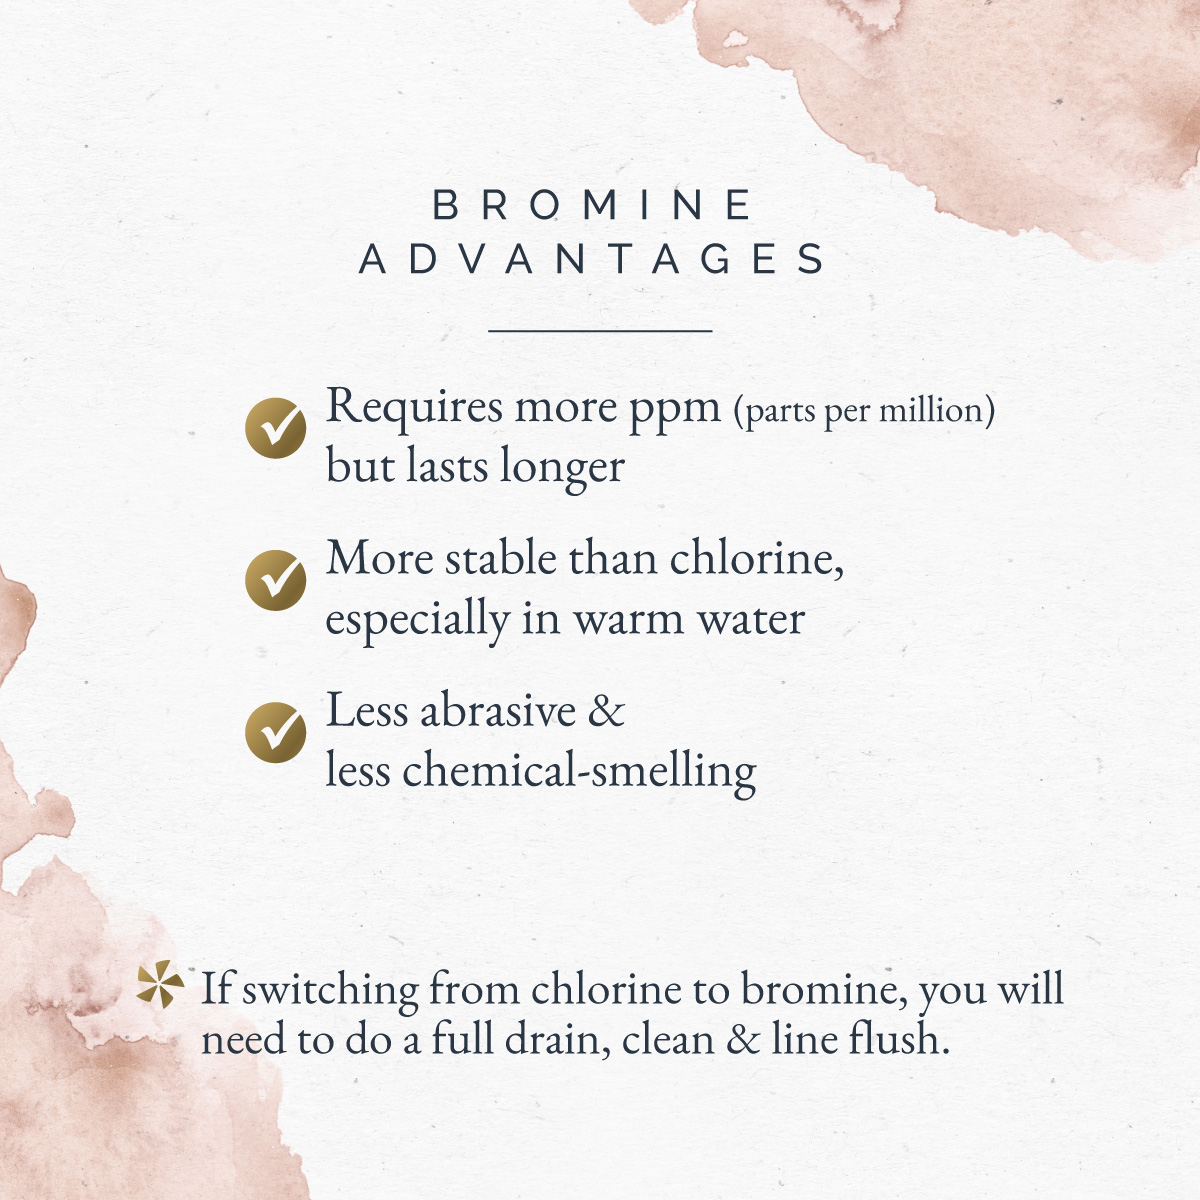 Bromine advantage chart